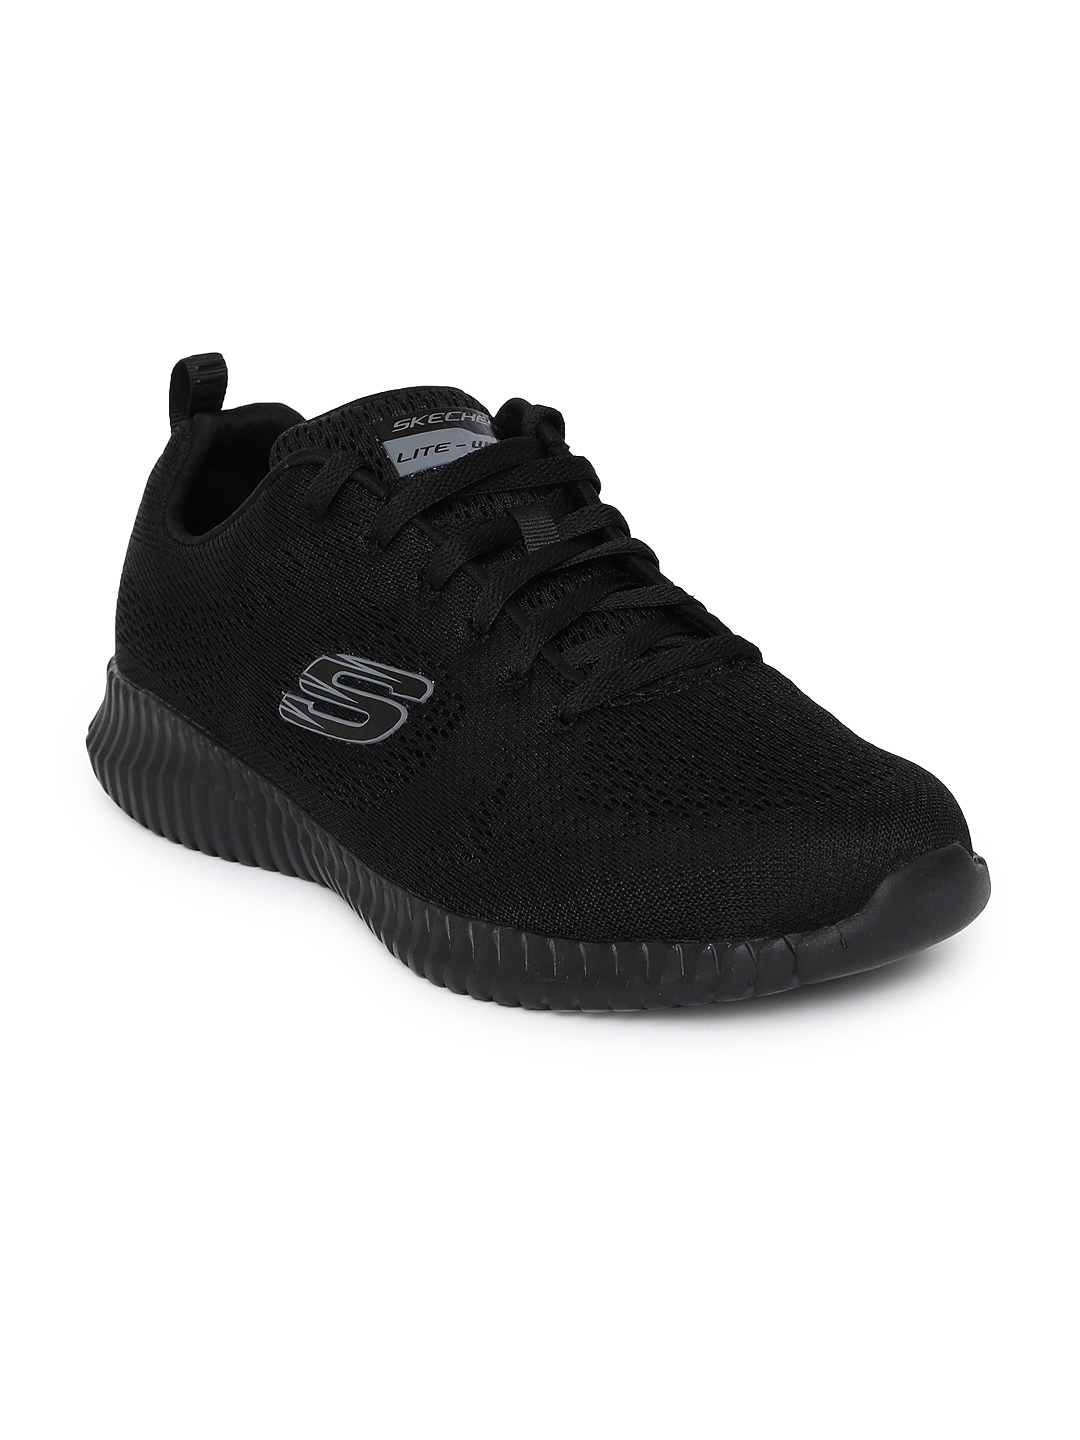 Black Sports Shoes Discount, SAVE 31% - aveclumiere.com